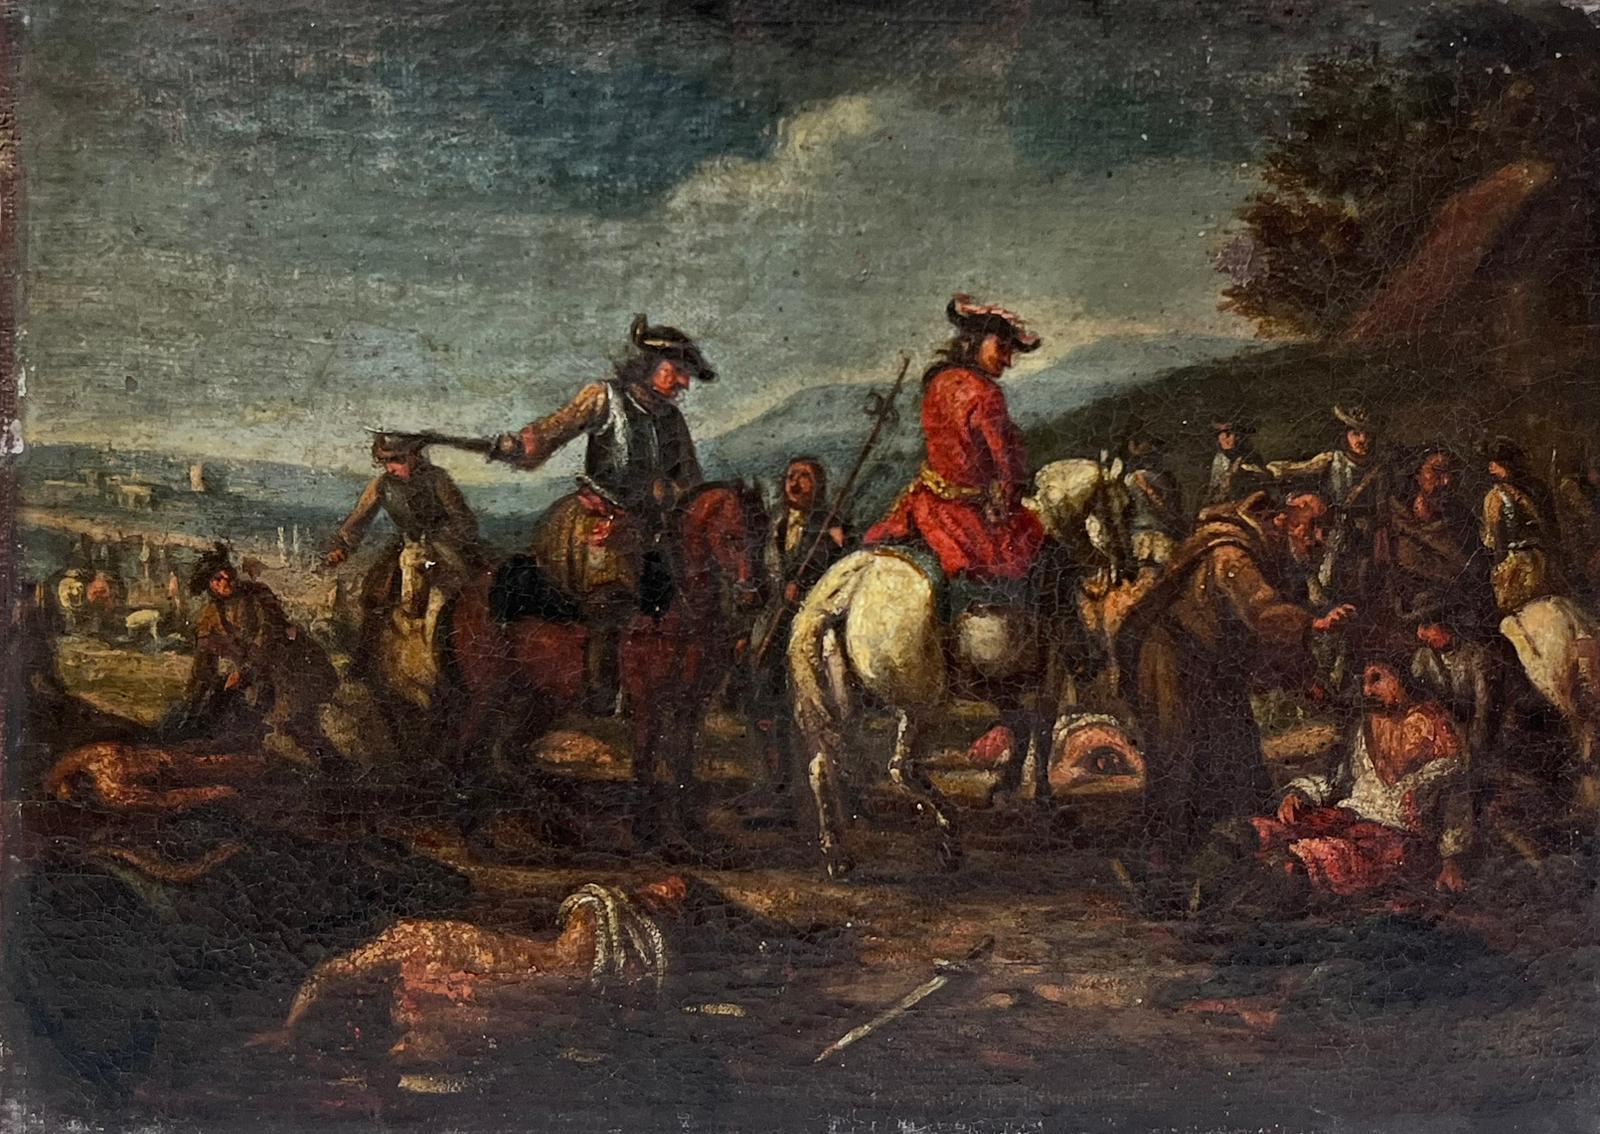 Military Encampment Soldiers on Horseback Dusk Landscape 1700's Oil Painting